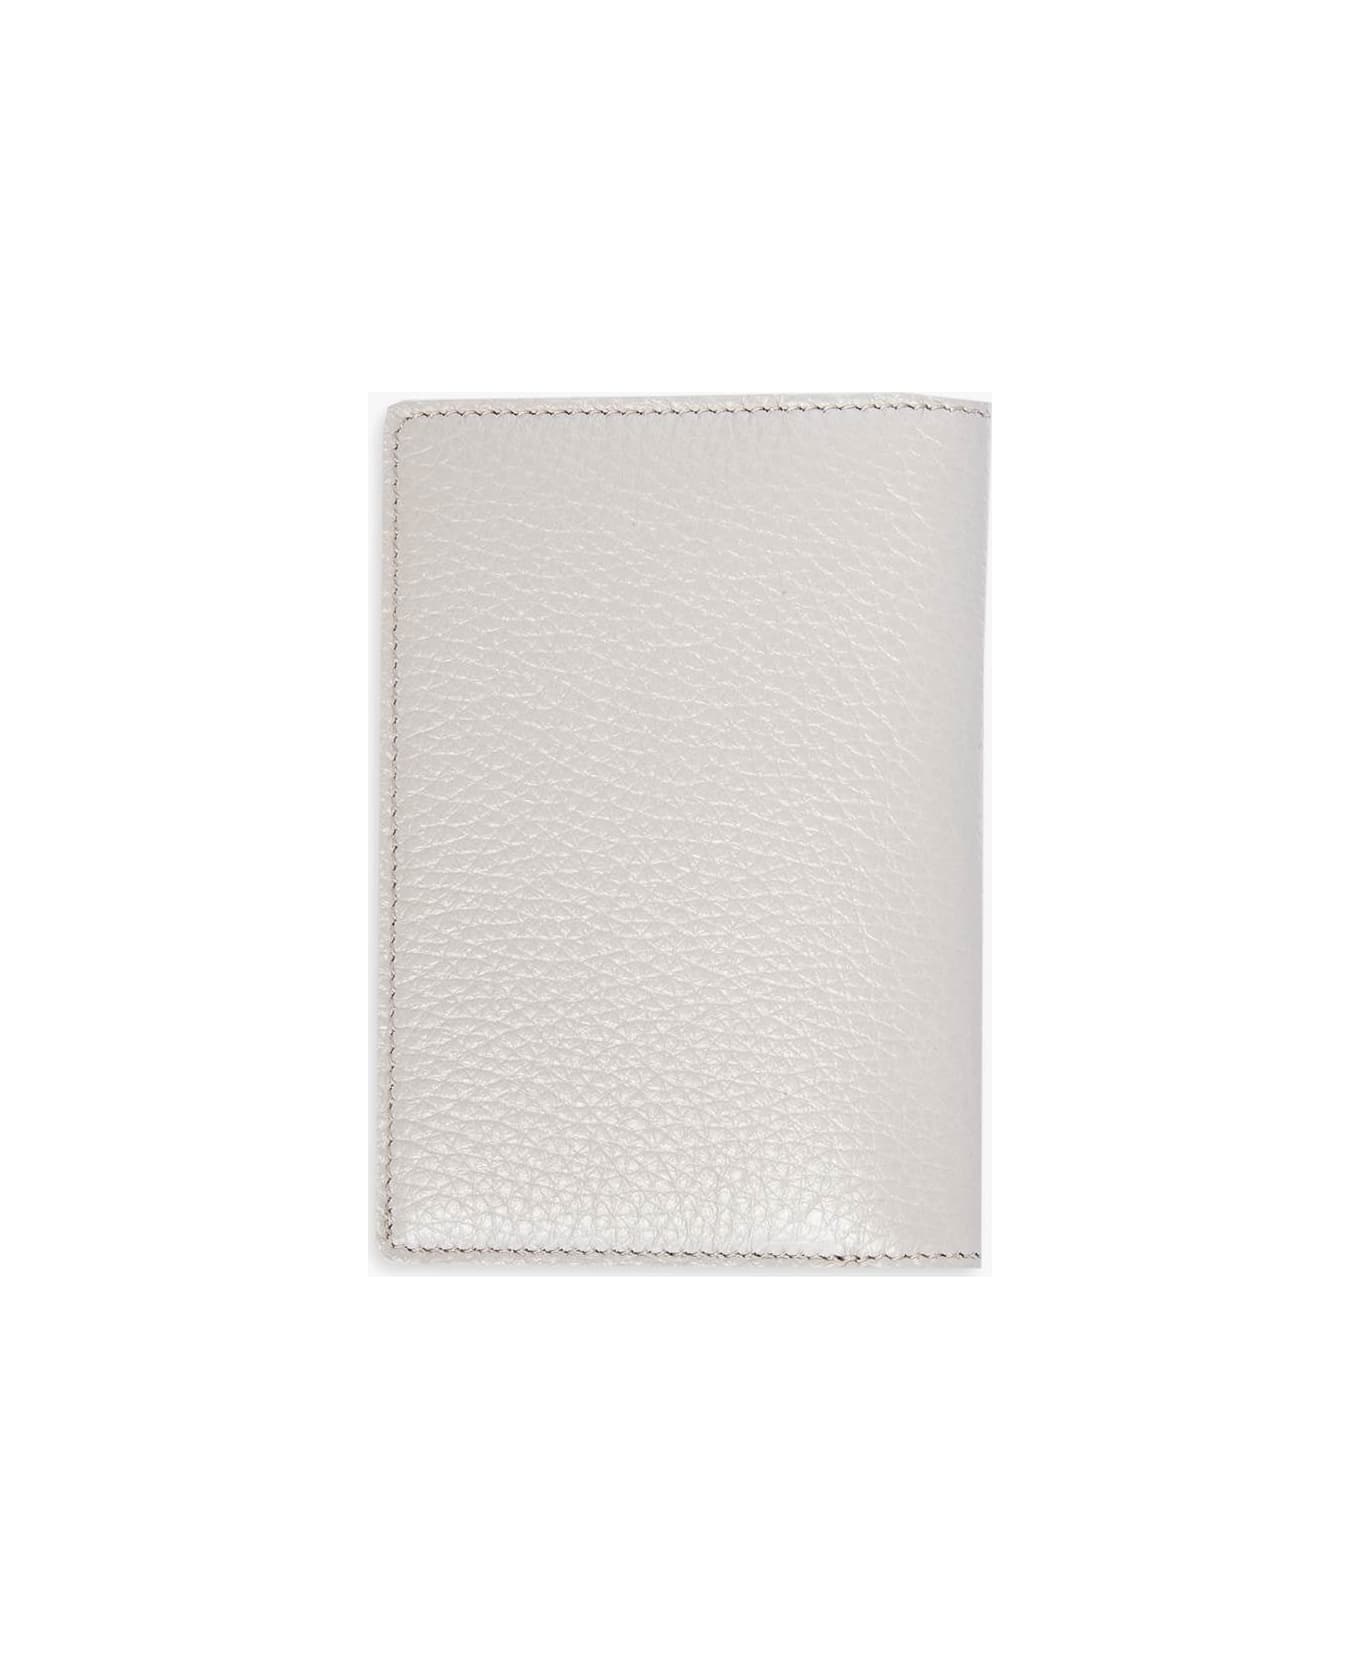 Larusmiani Passport Cover 'fiumicino' Wallet - DimGray 財布